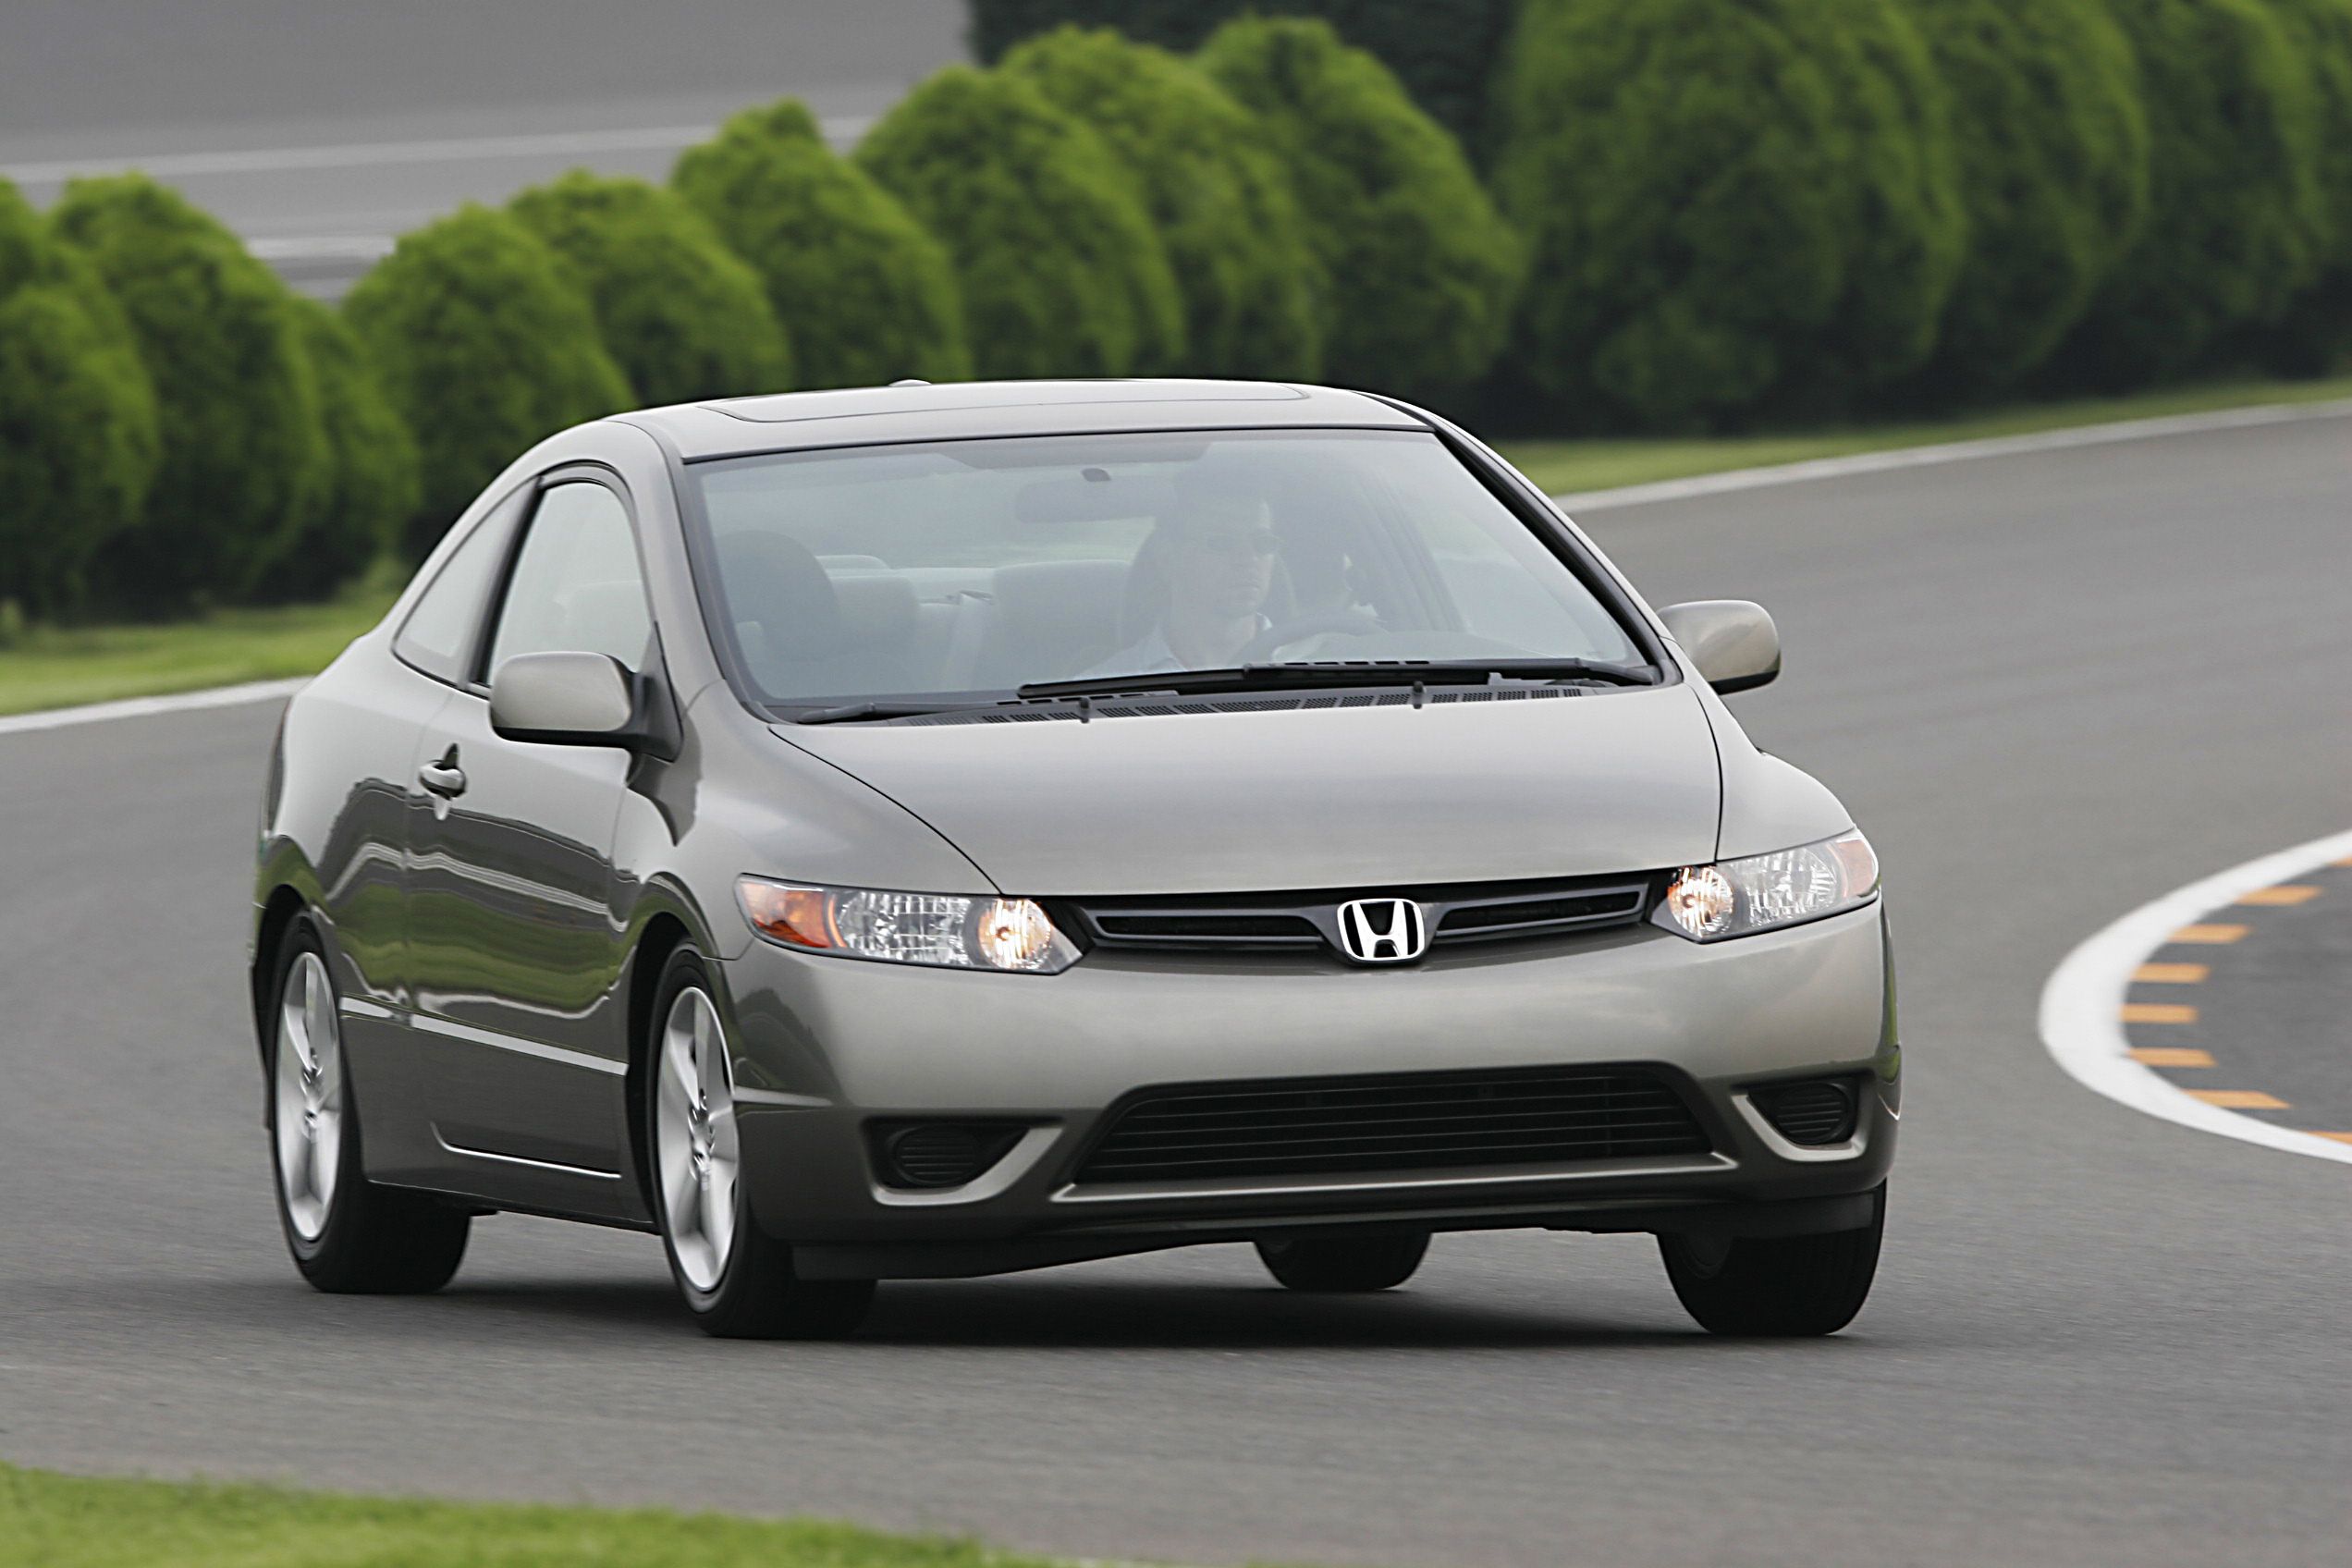 2006 Honda Civic Coupe